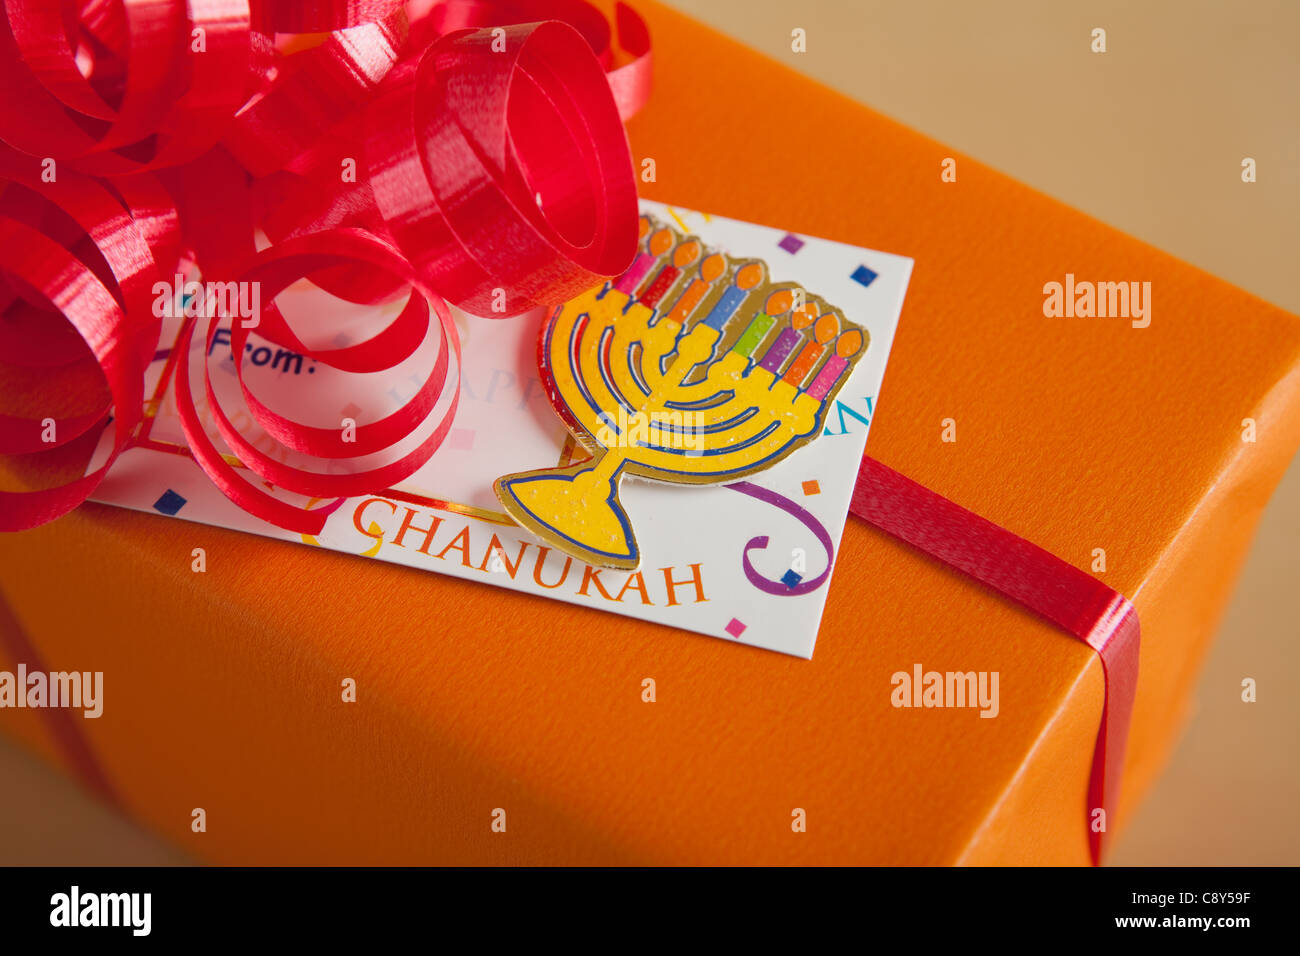 USA, Illinois, Metamora, Chanukah gift and greeting card Stock Photo